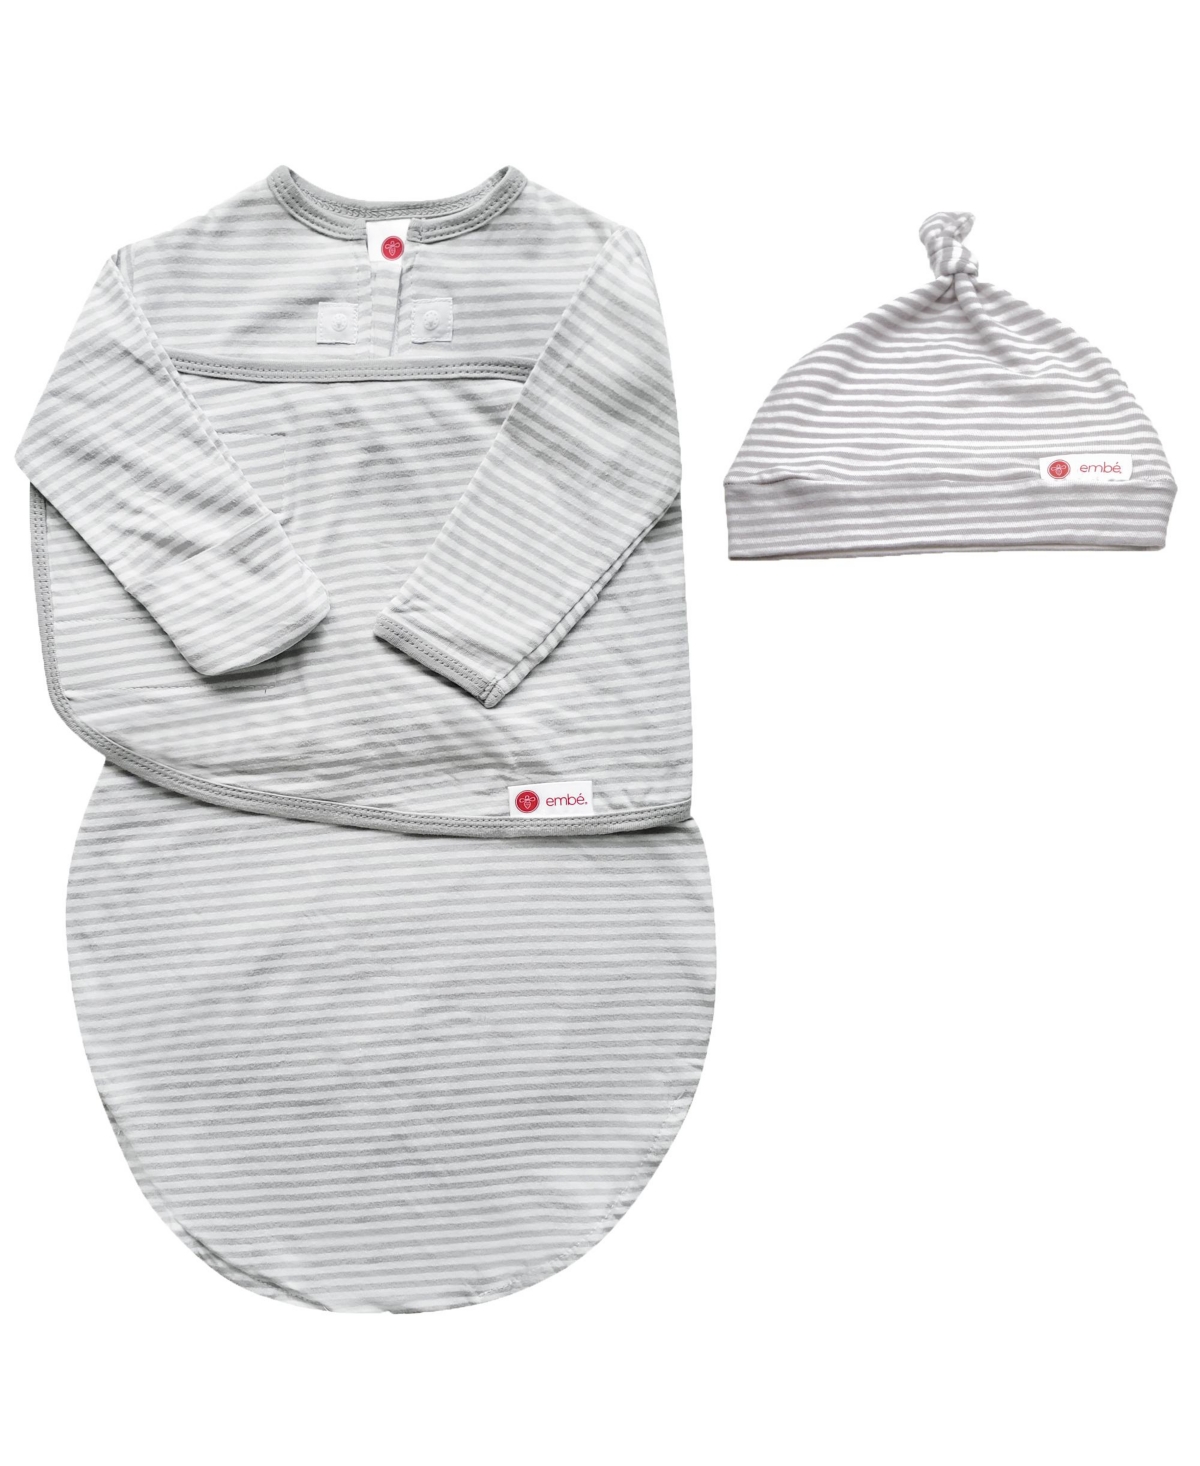 Embe Babies' Starter 2-way Long Sleeve Swaddle & Hat Set In Grey Stripes